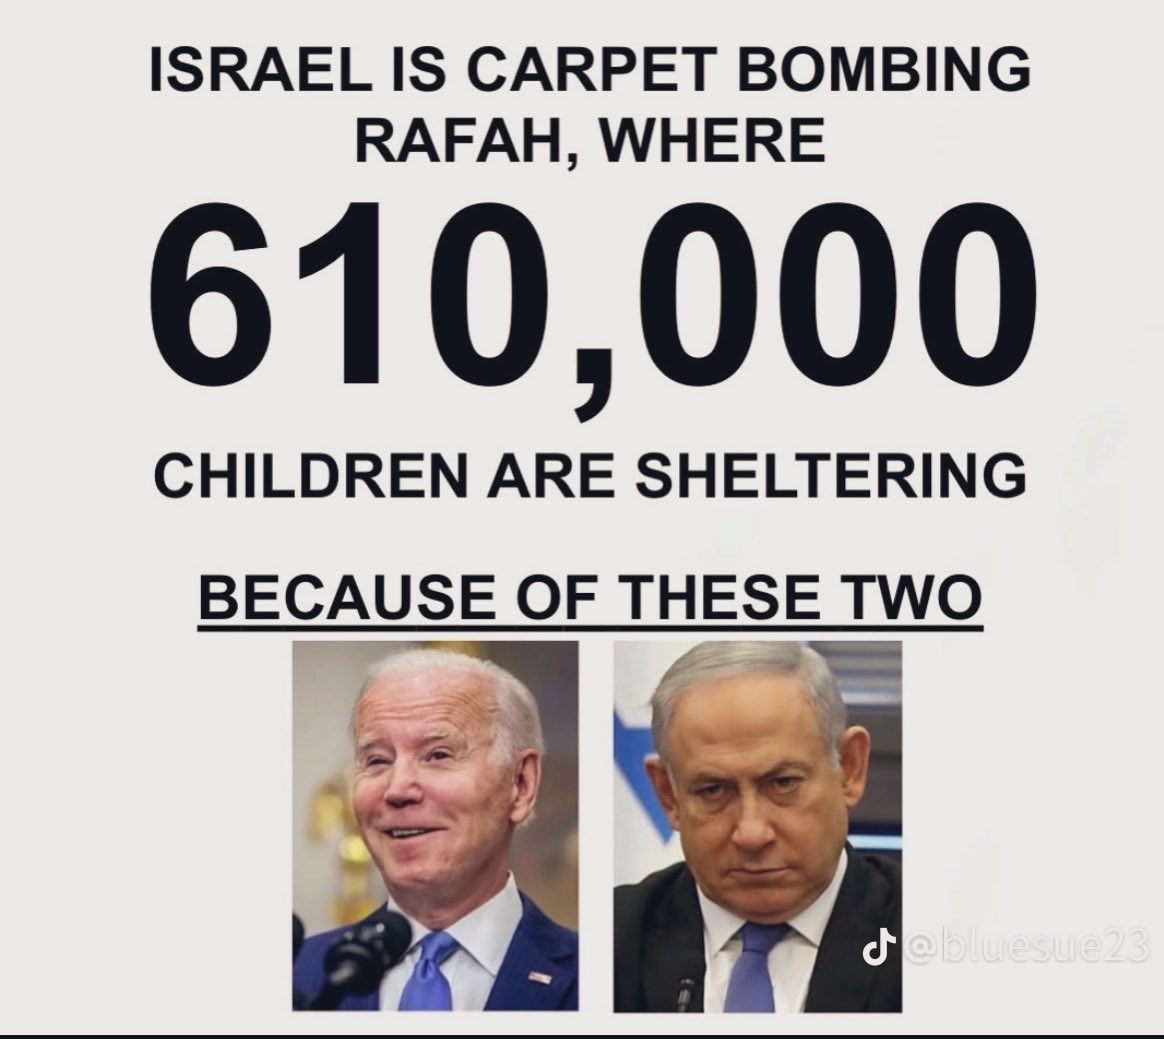 Israel is carpet bombing Rafah, where 610,000 children are sheltering. #Rafah